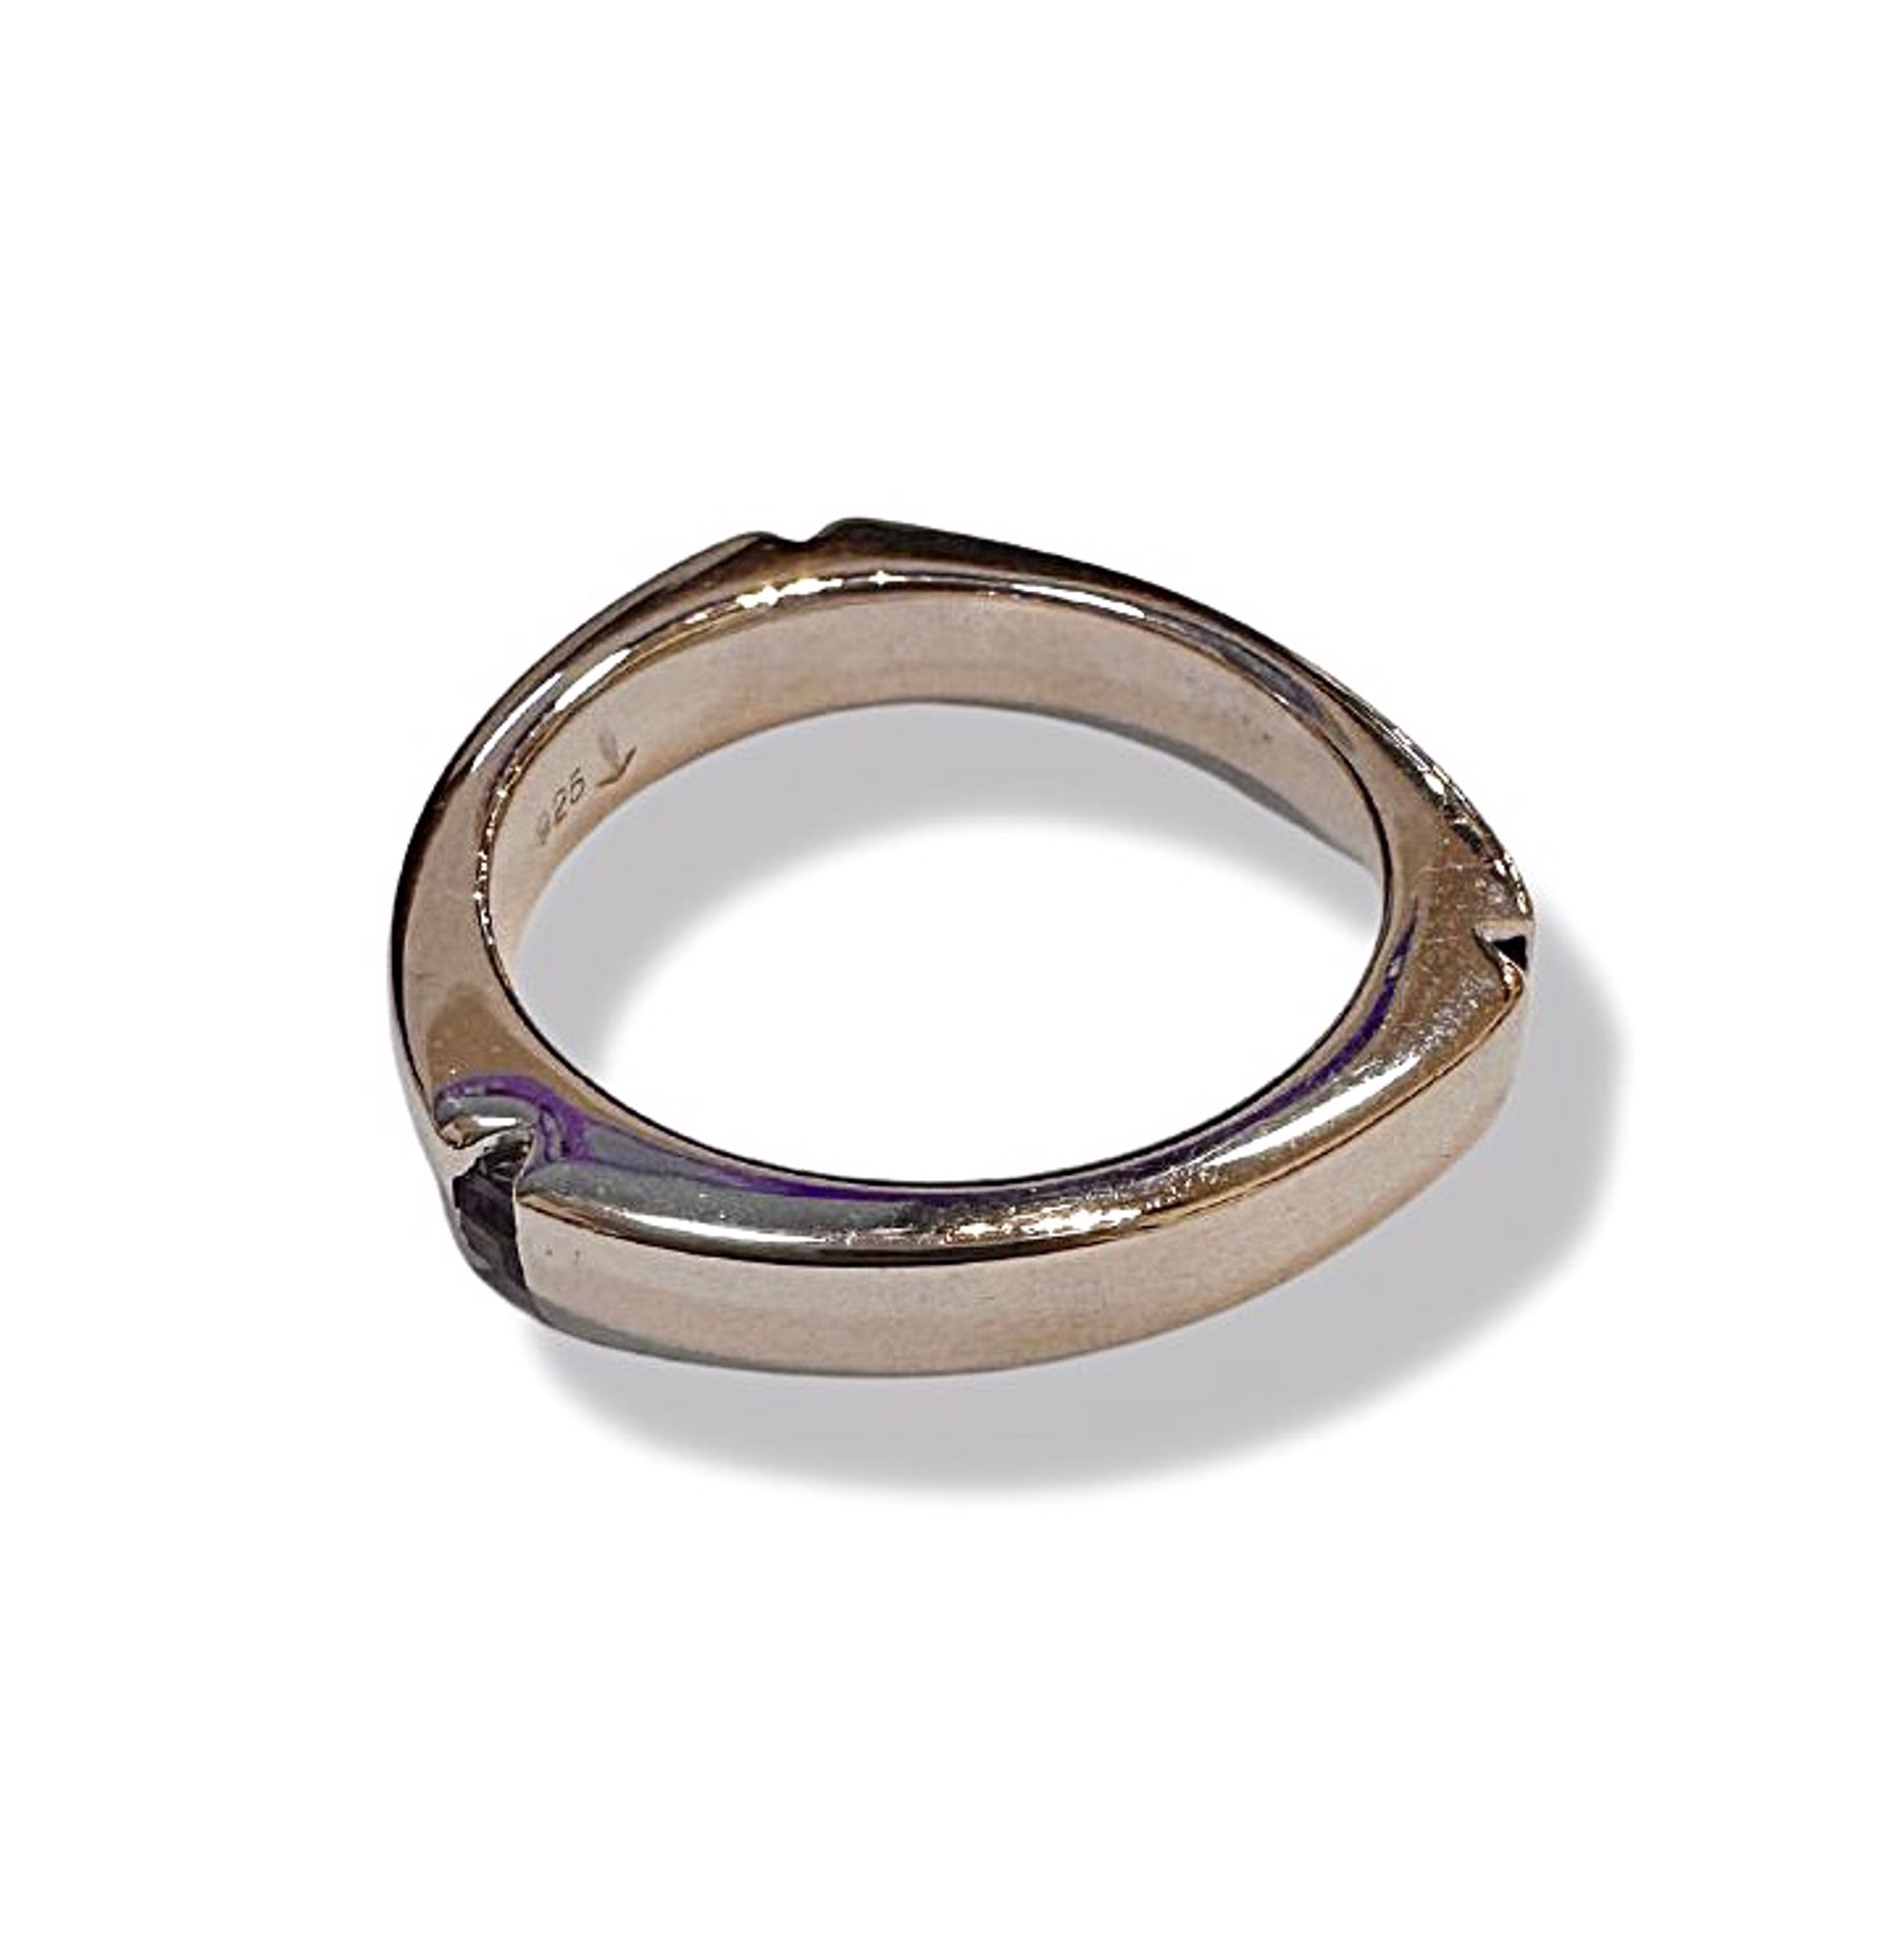 Ring - Sterling Silver 3 Sided Ring with Garnet, Amethyst, & Iolite by Joryel Vera